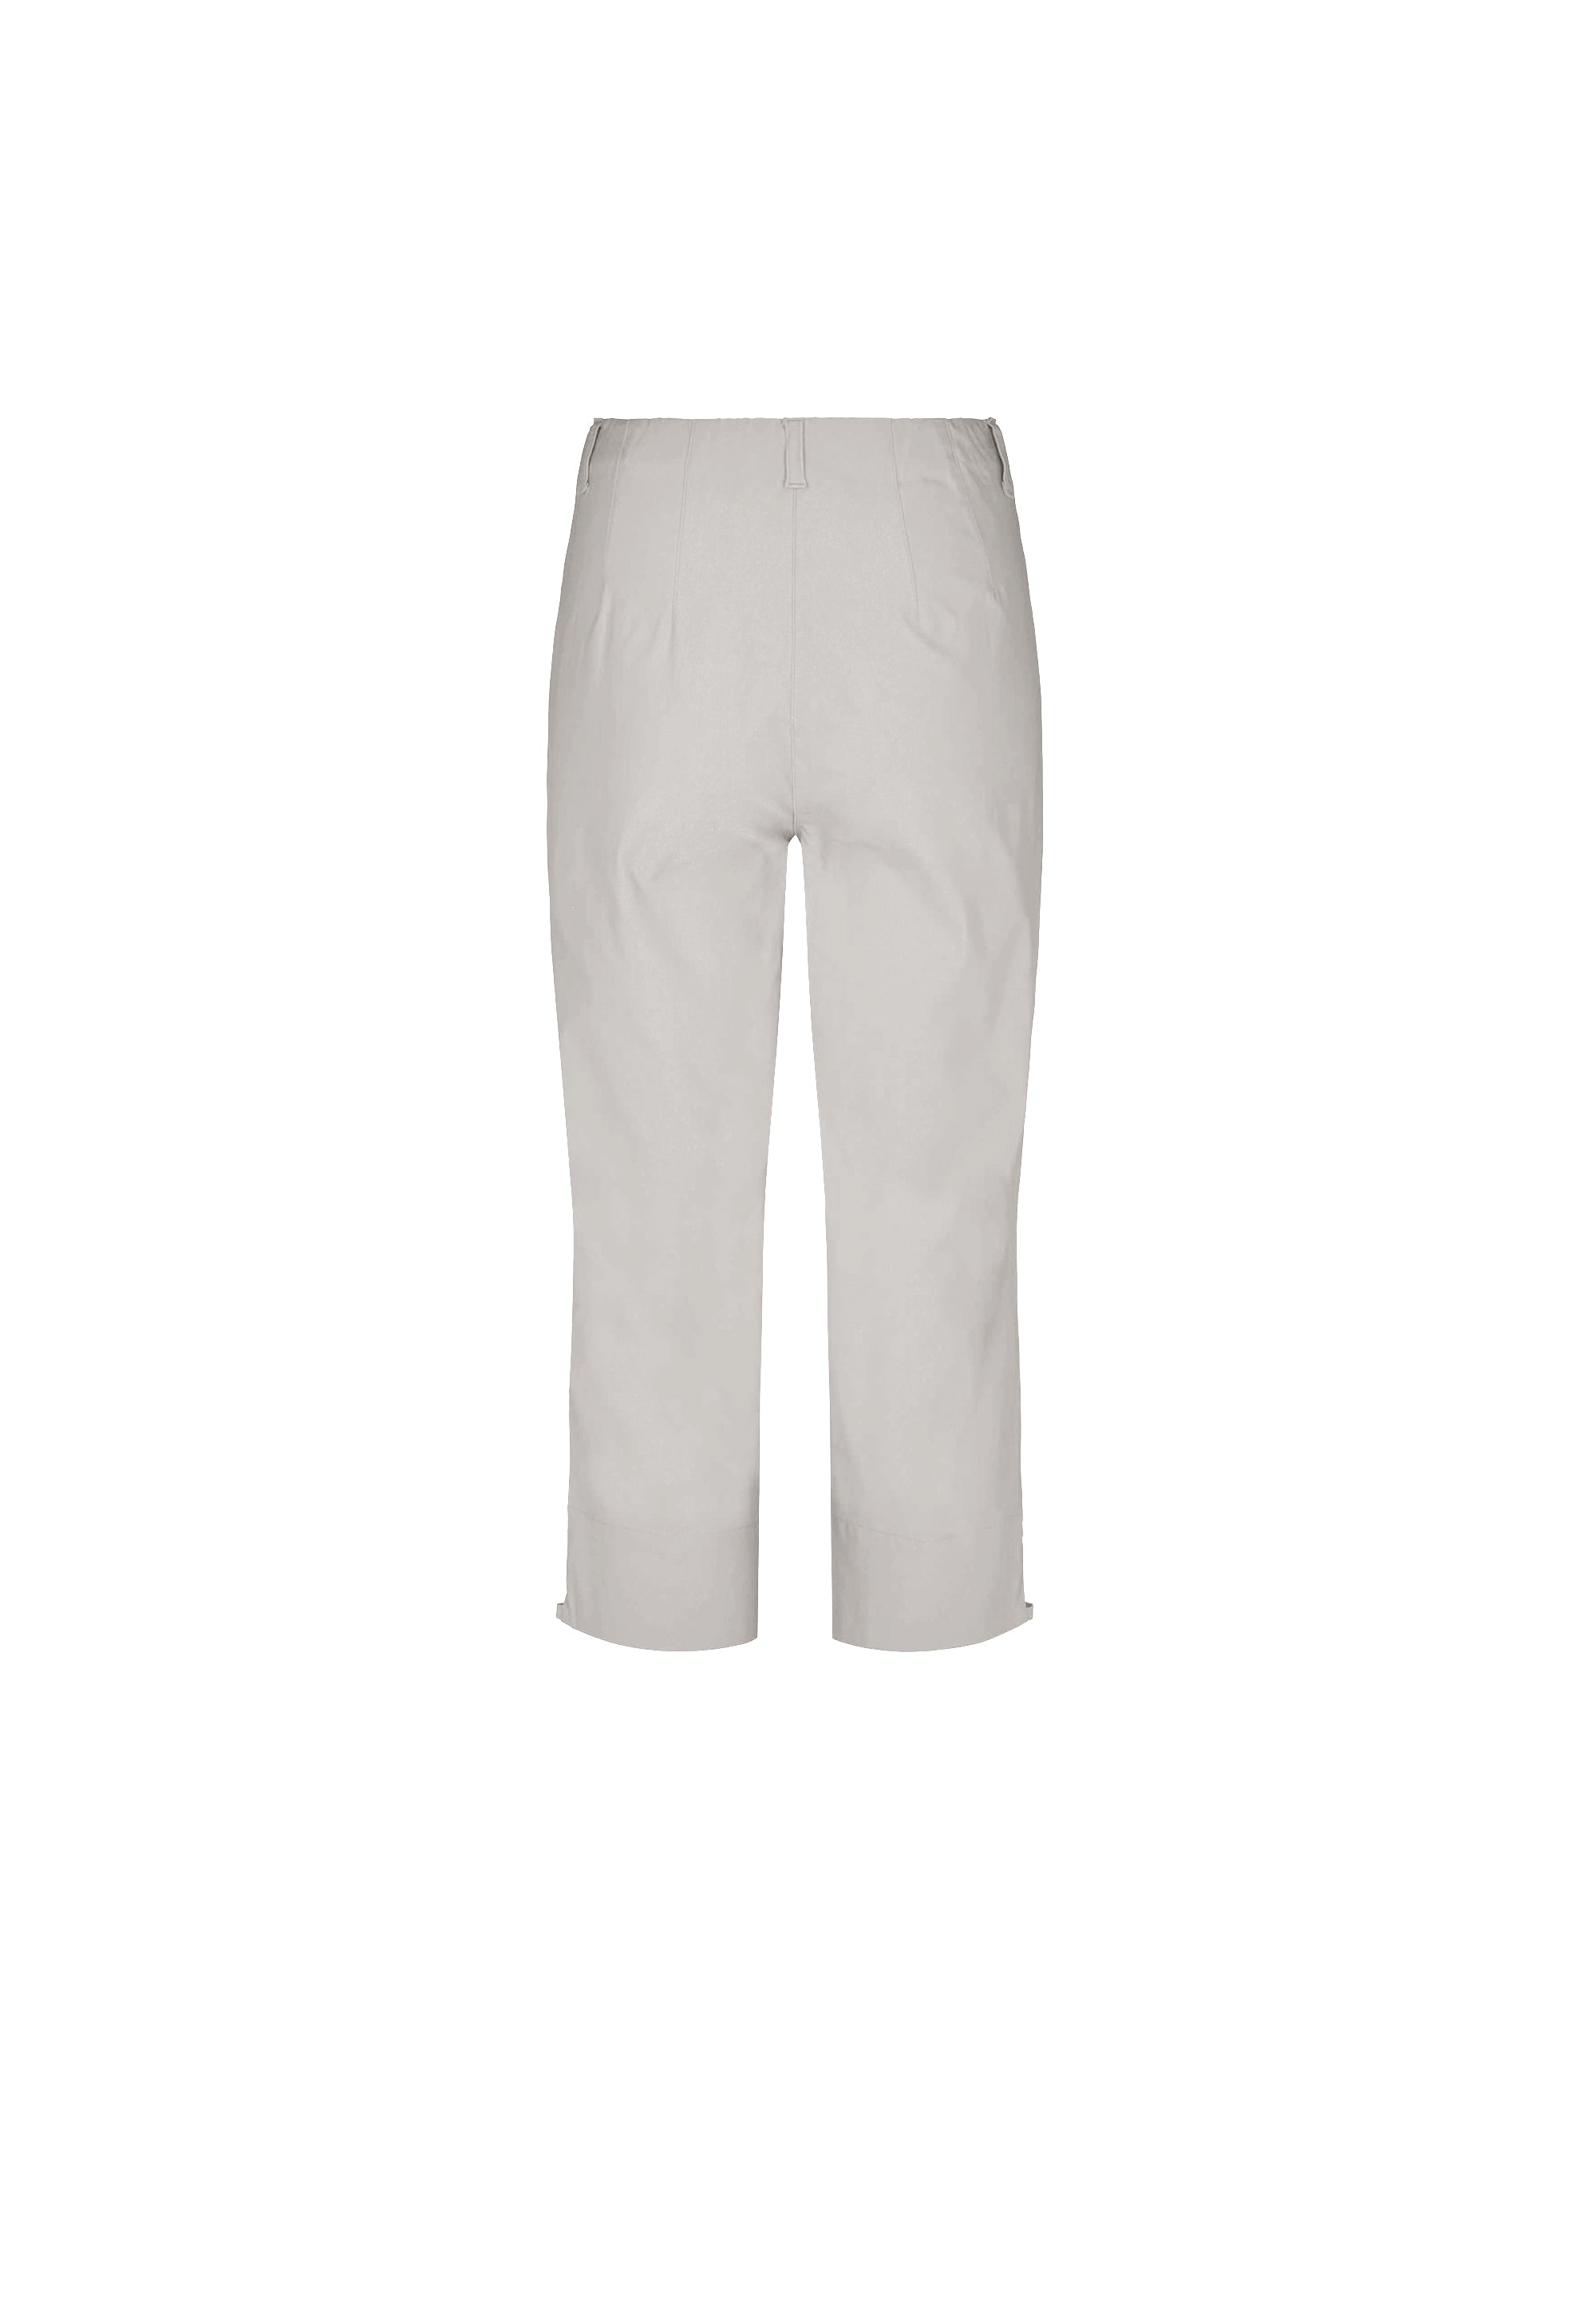 LAURIE Anabelle Regular Capri ML Trousers REGULAR 25137 Grey Sand